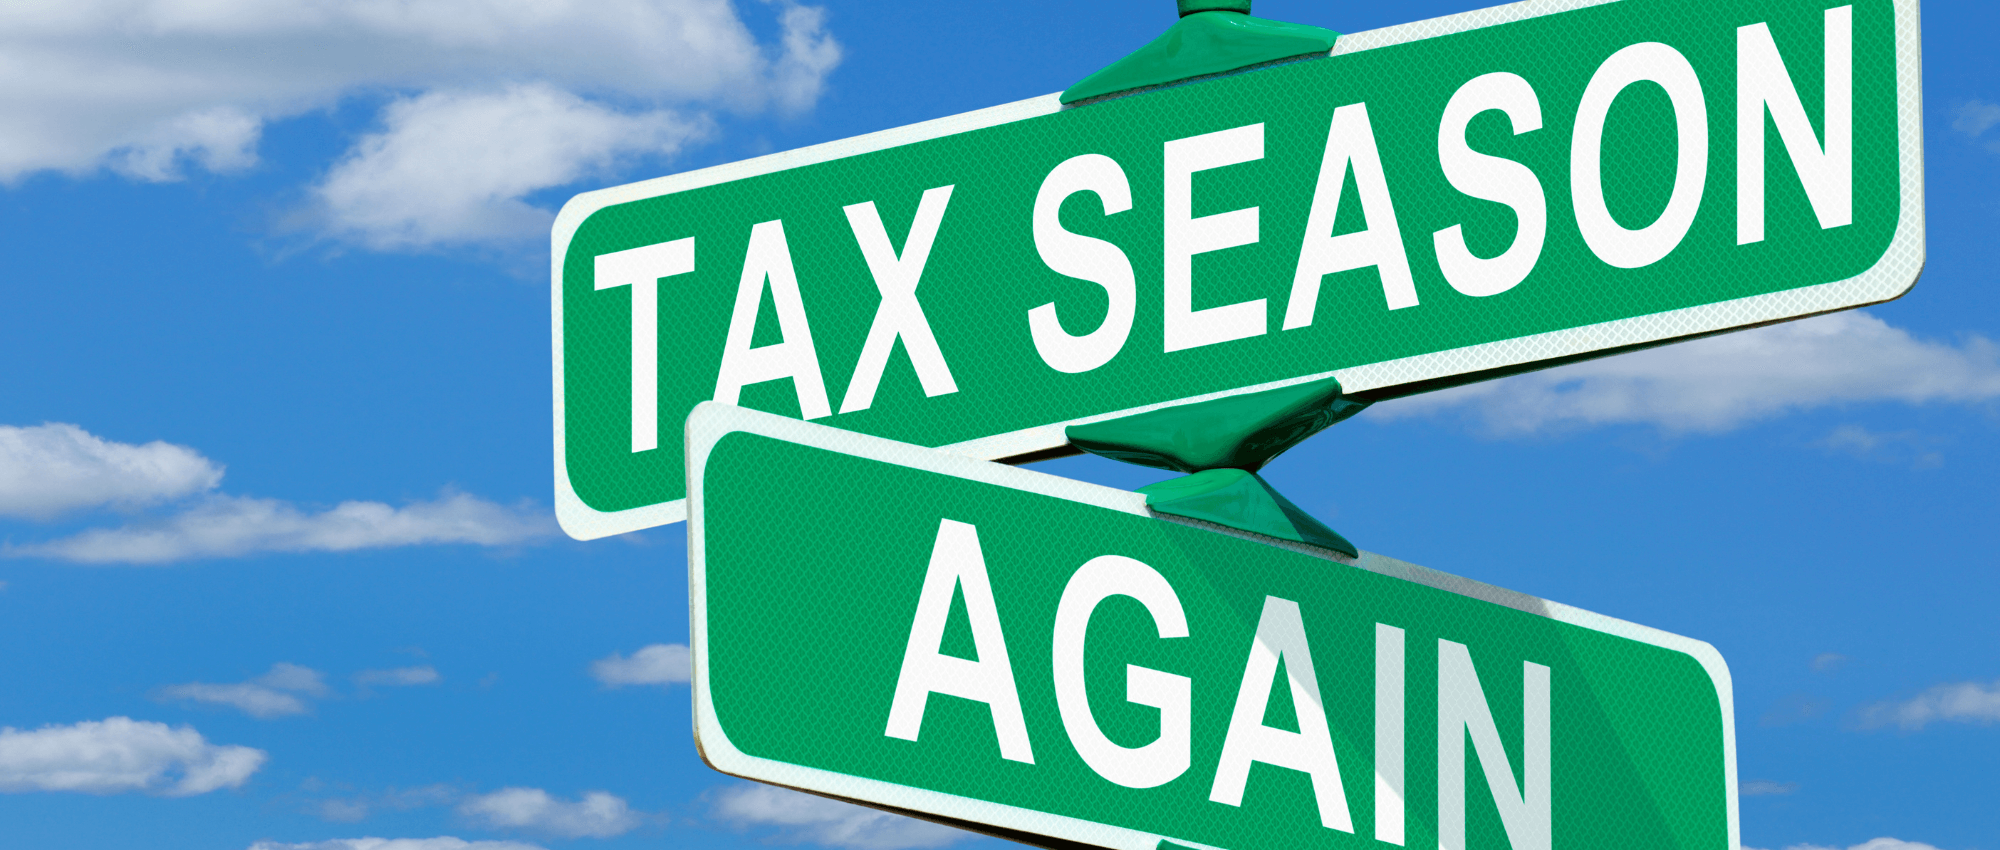 road sign reading tax season again